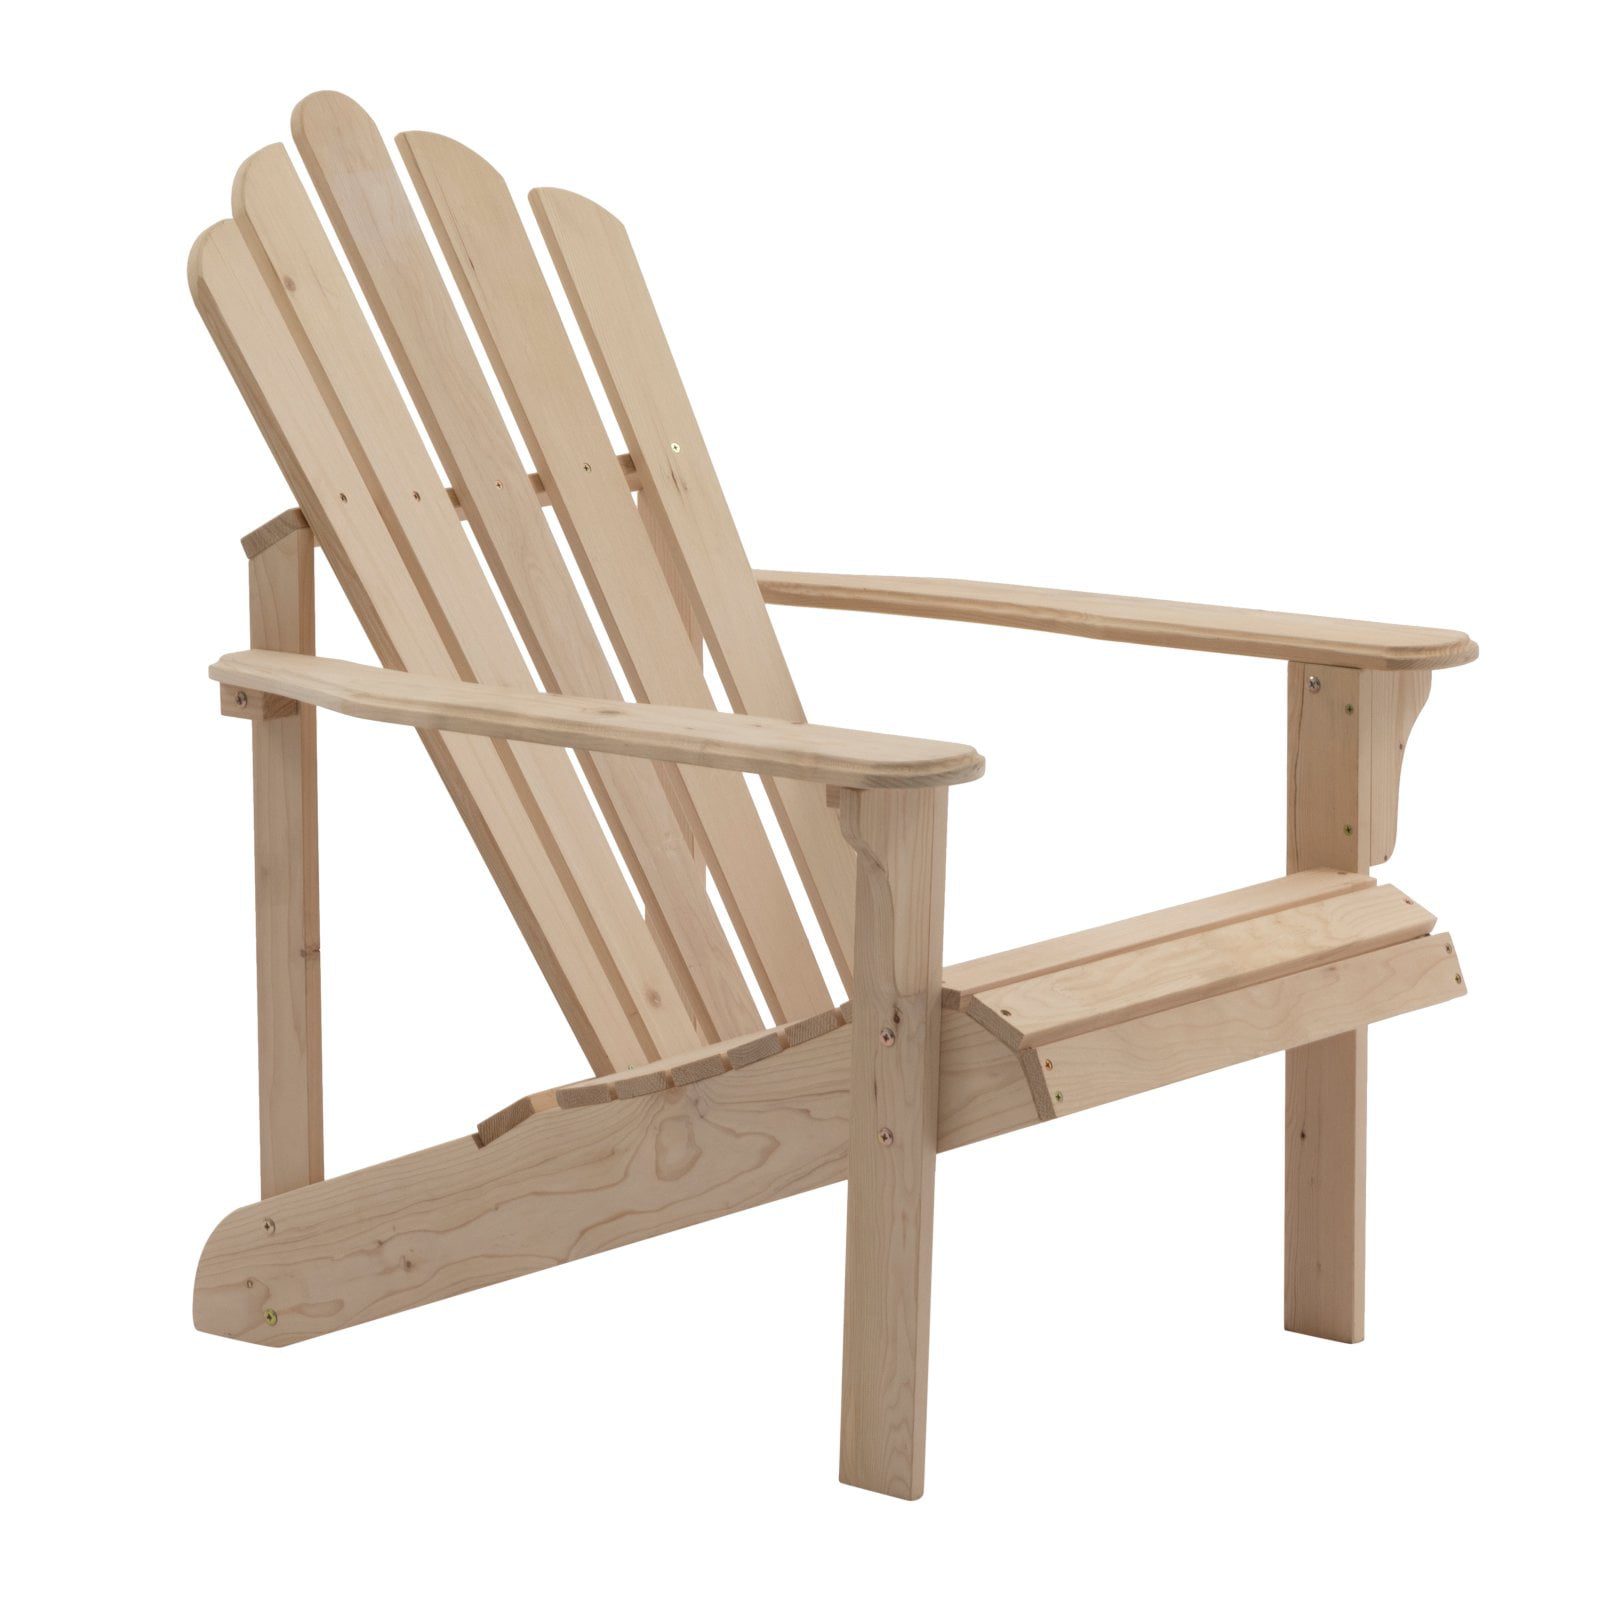 Coral Coast Hubbard Wooden Adirondack Chair Unfinished Walmart Com